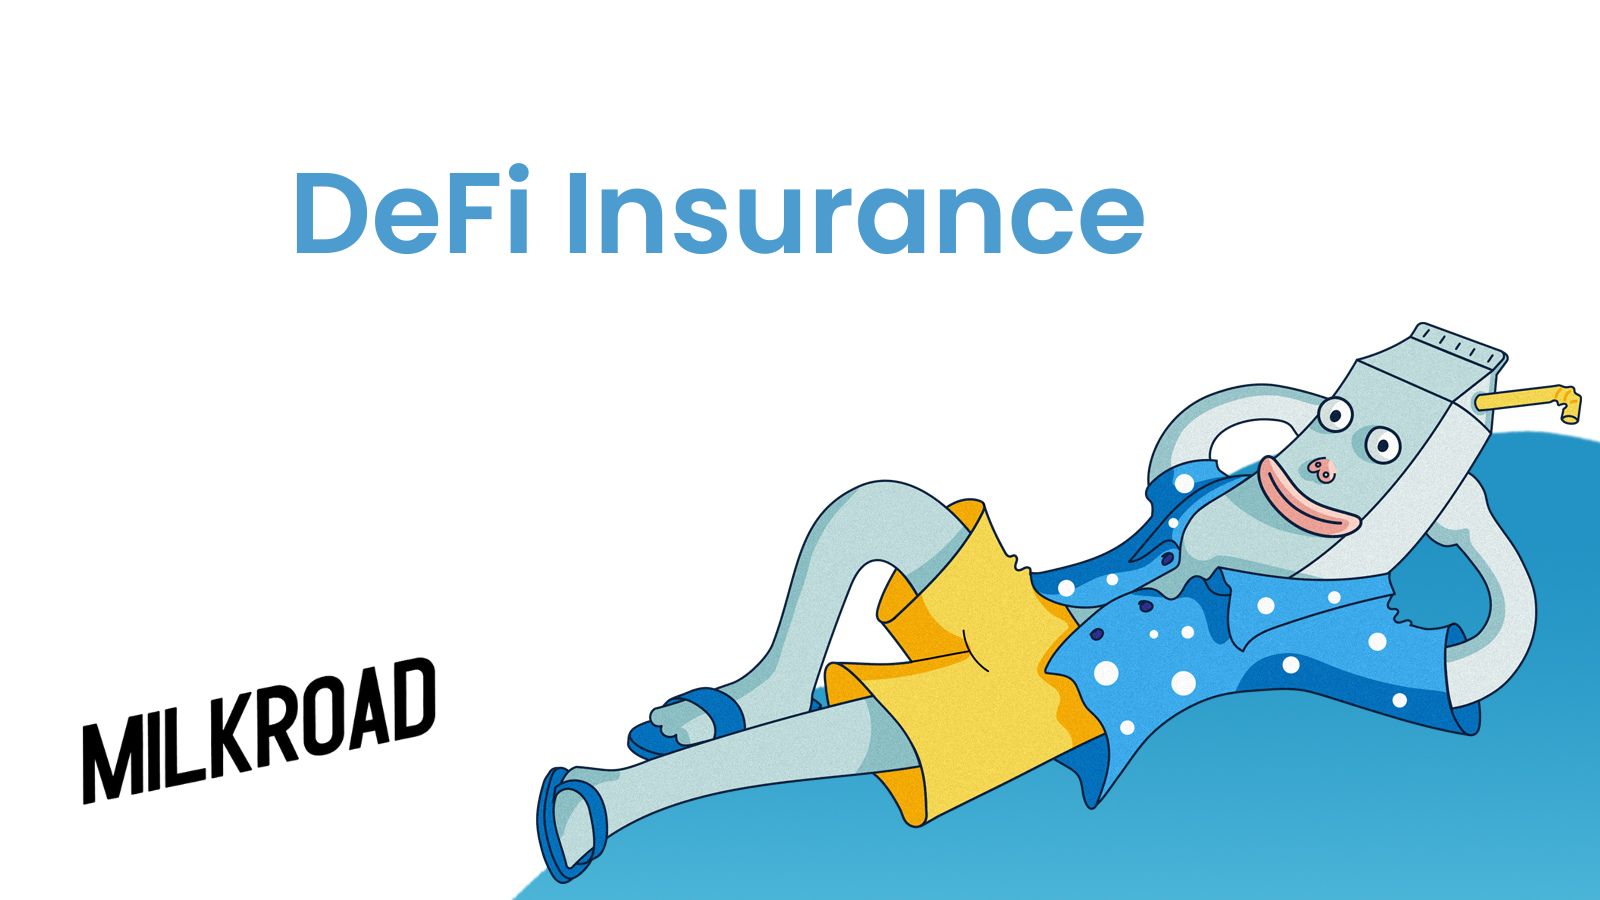 DeFi Insurance